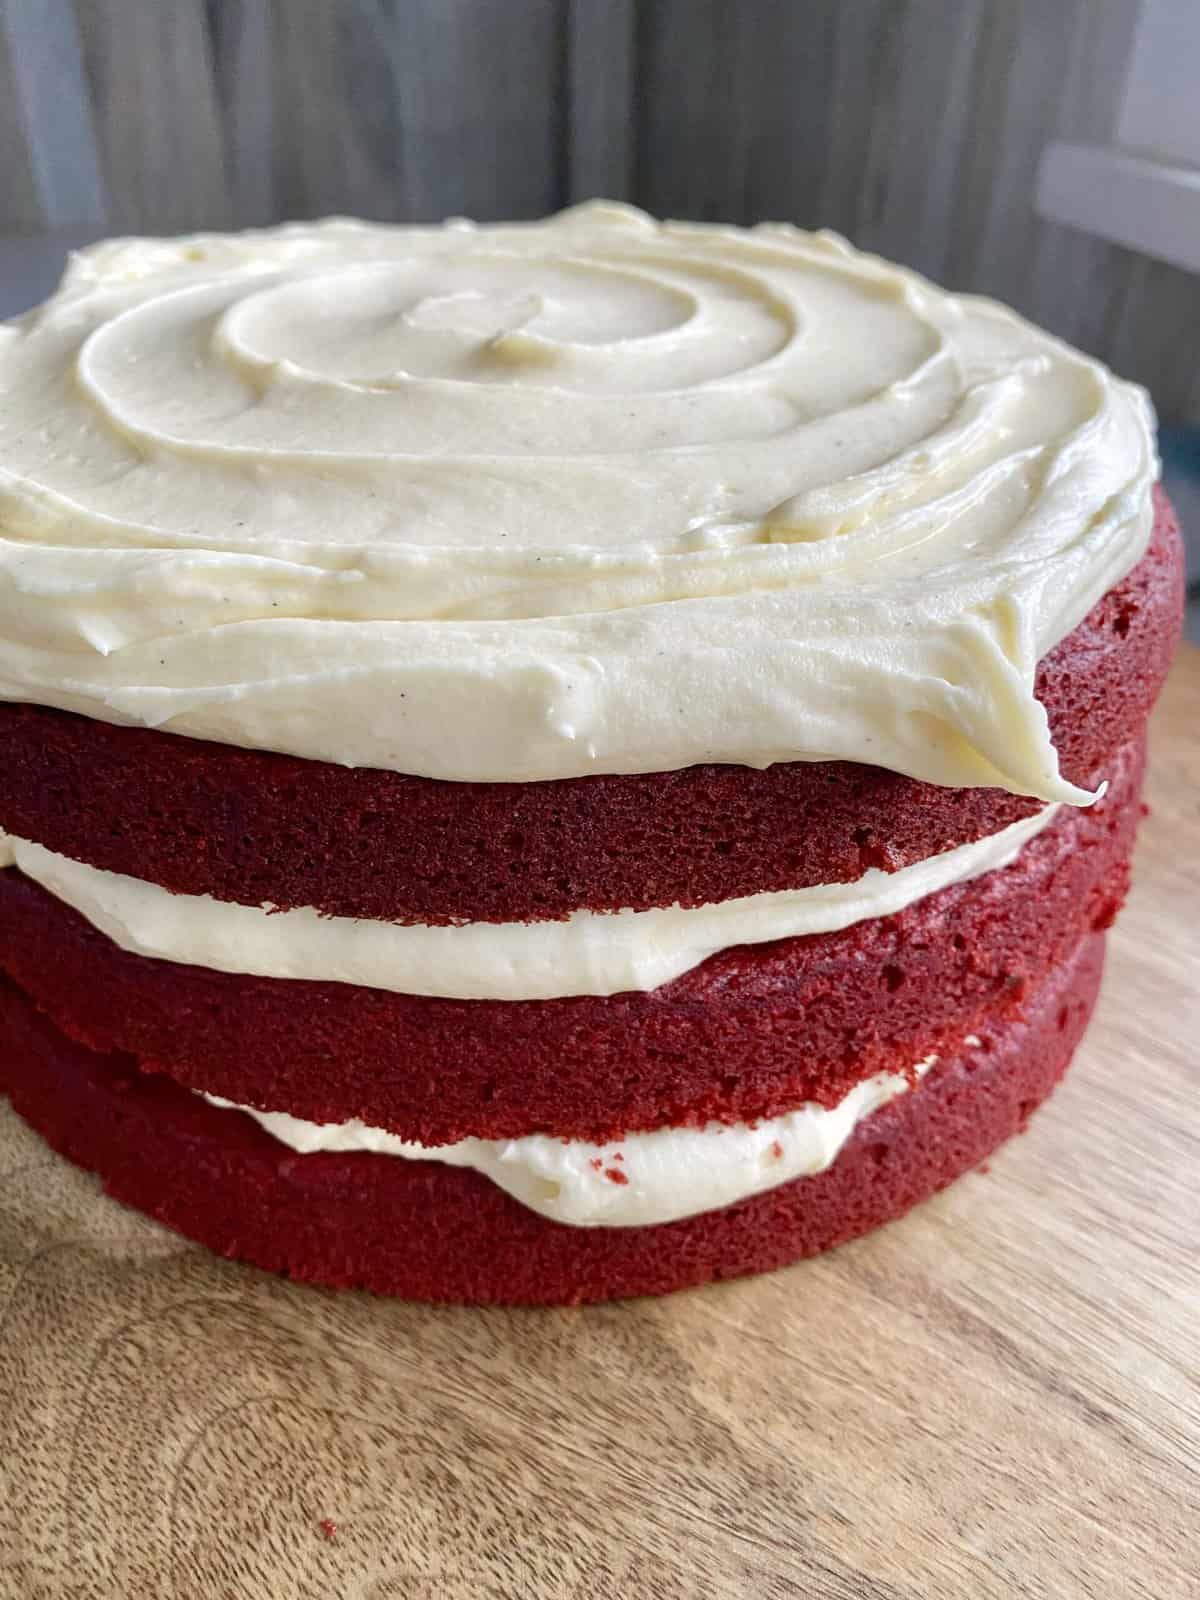 Best Ever Vegan Red Velvet Cake with Cream Cheese Frosting